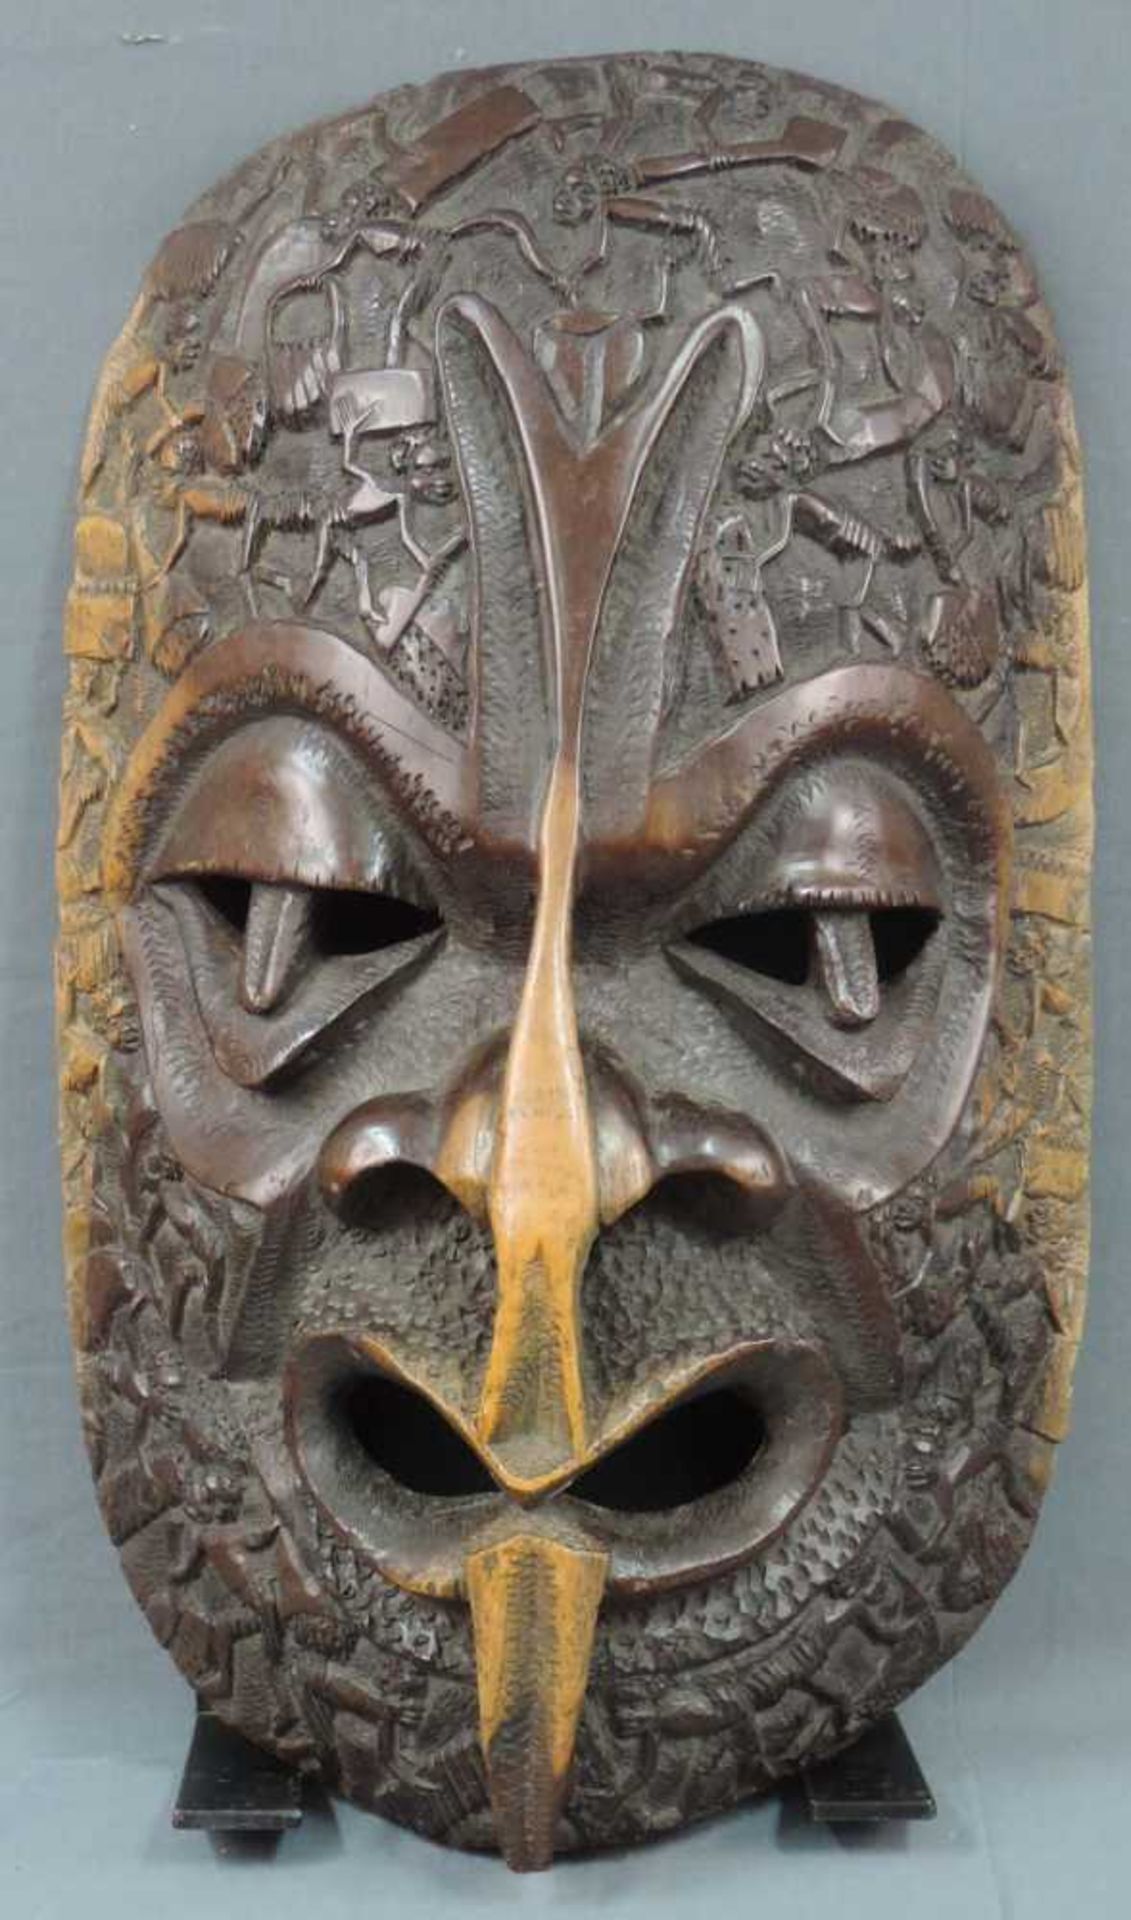 Große Maske, wohl Babanki, Kamerun 1. Hälfte 20. Jahrhundert. 58 cm x 35 cm x 16 cm. Hartholz. Die